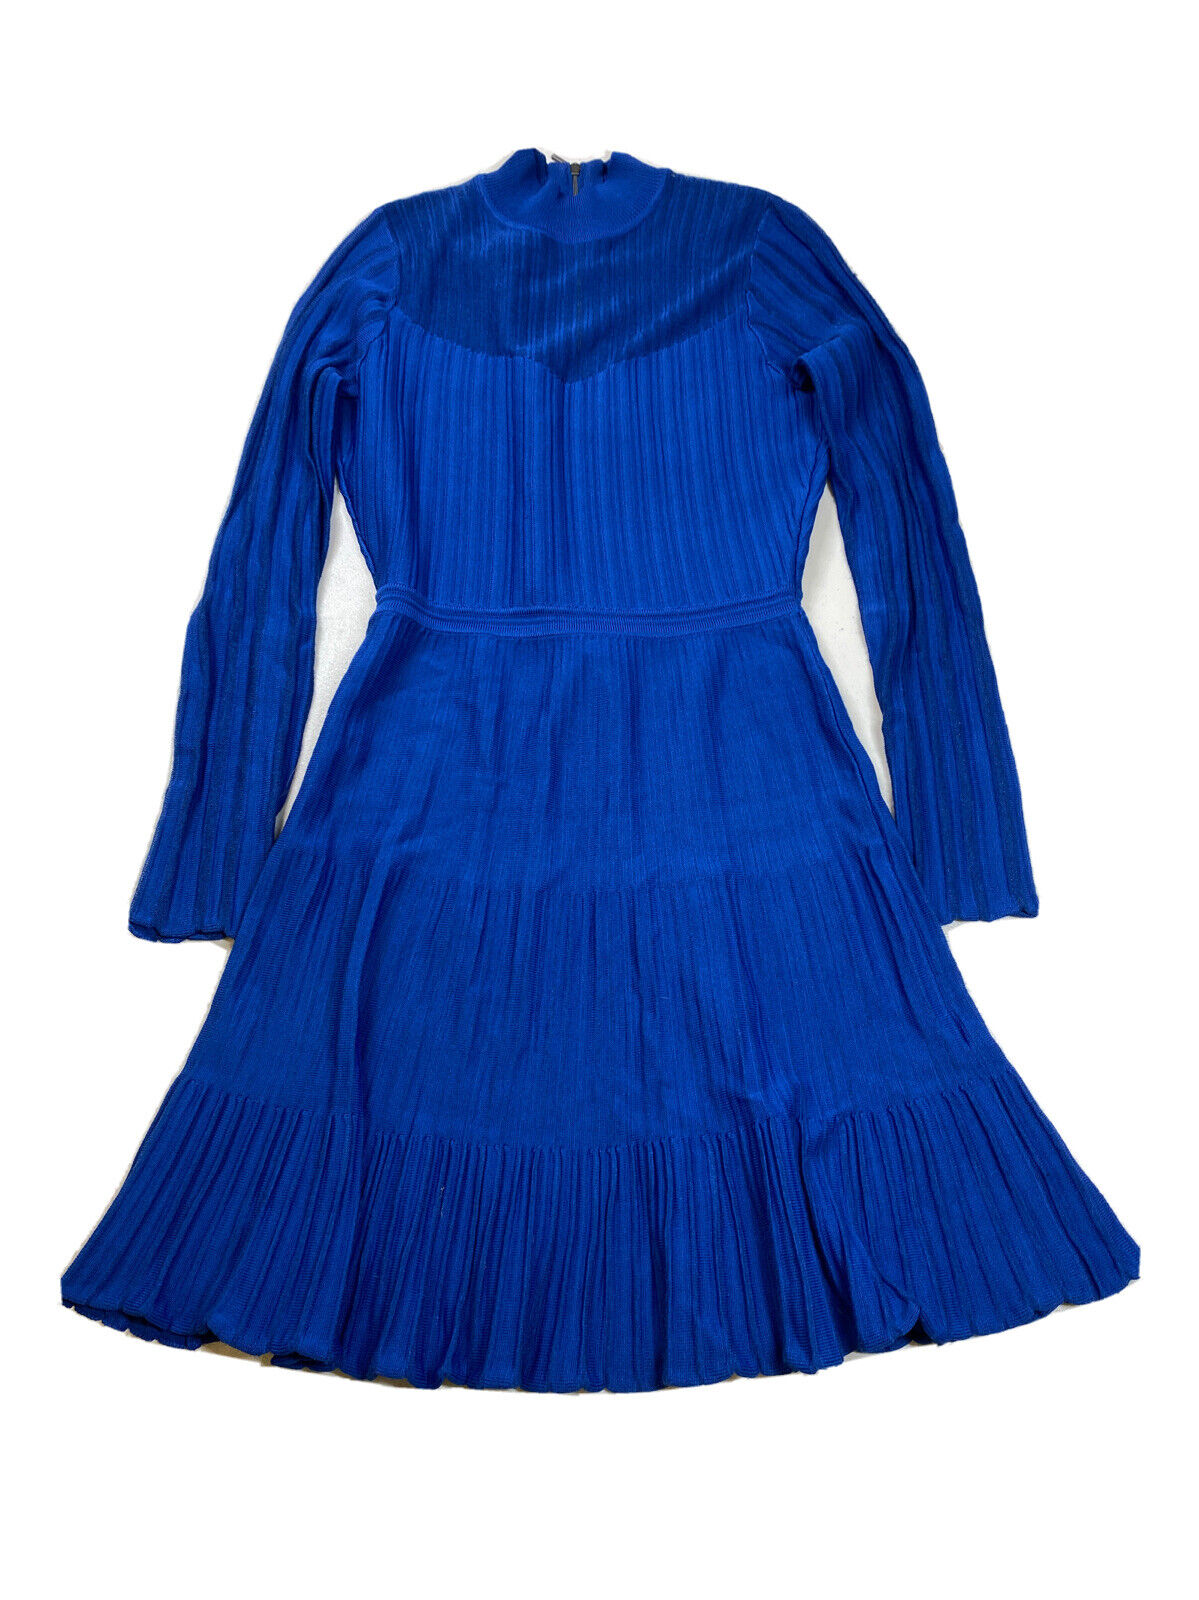 Reiss Women's Blue Long Sleeve Mesh Neck Sweater Dress - S